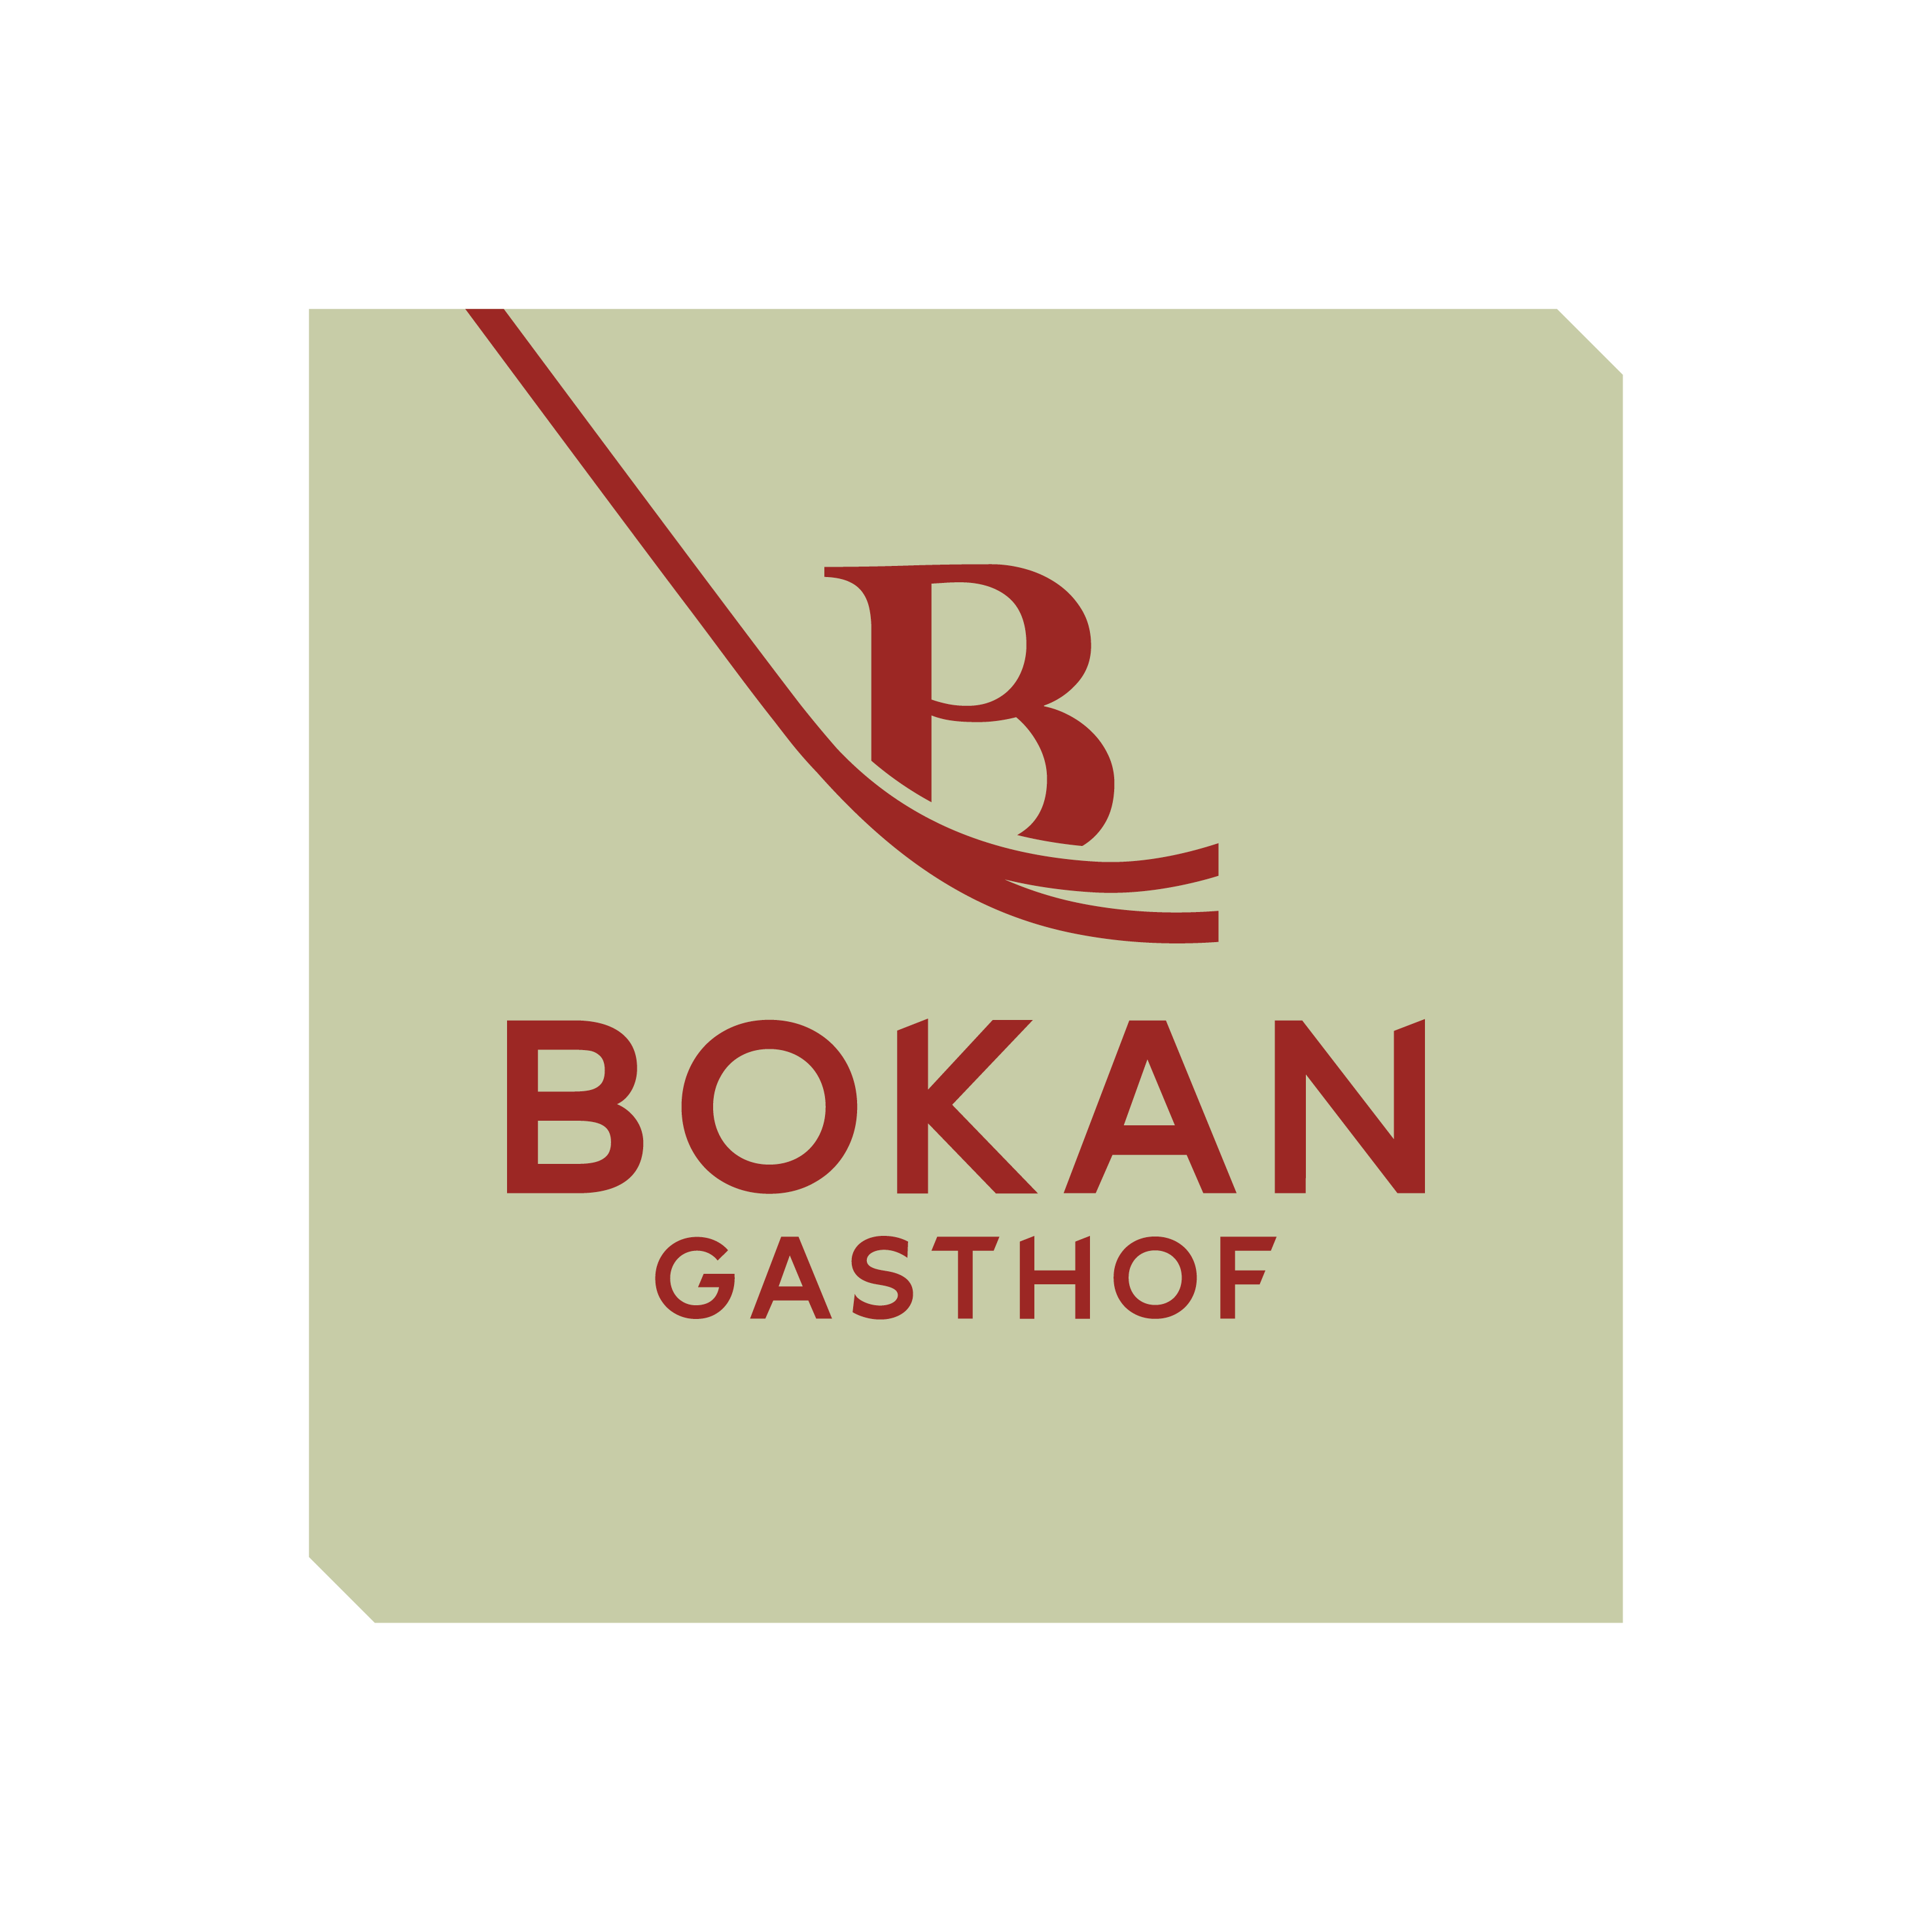 Bokan Restaurant, Graz